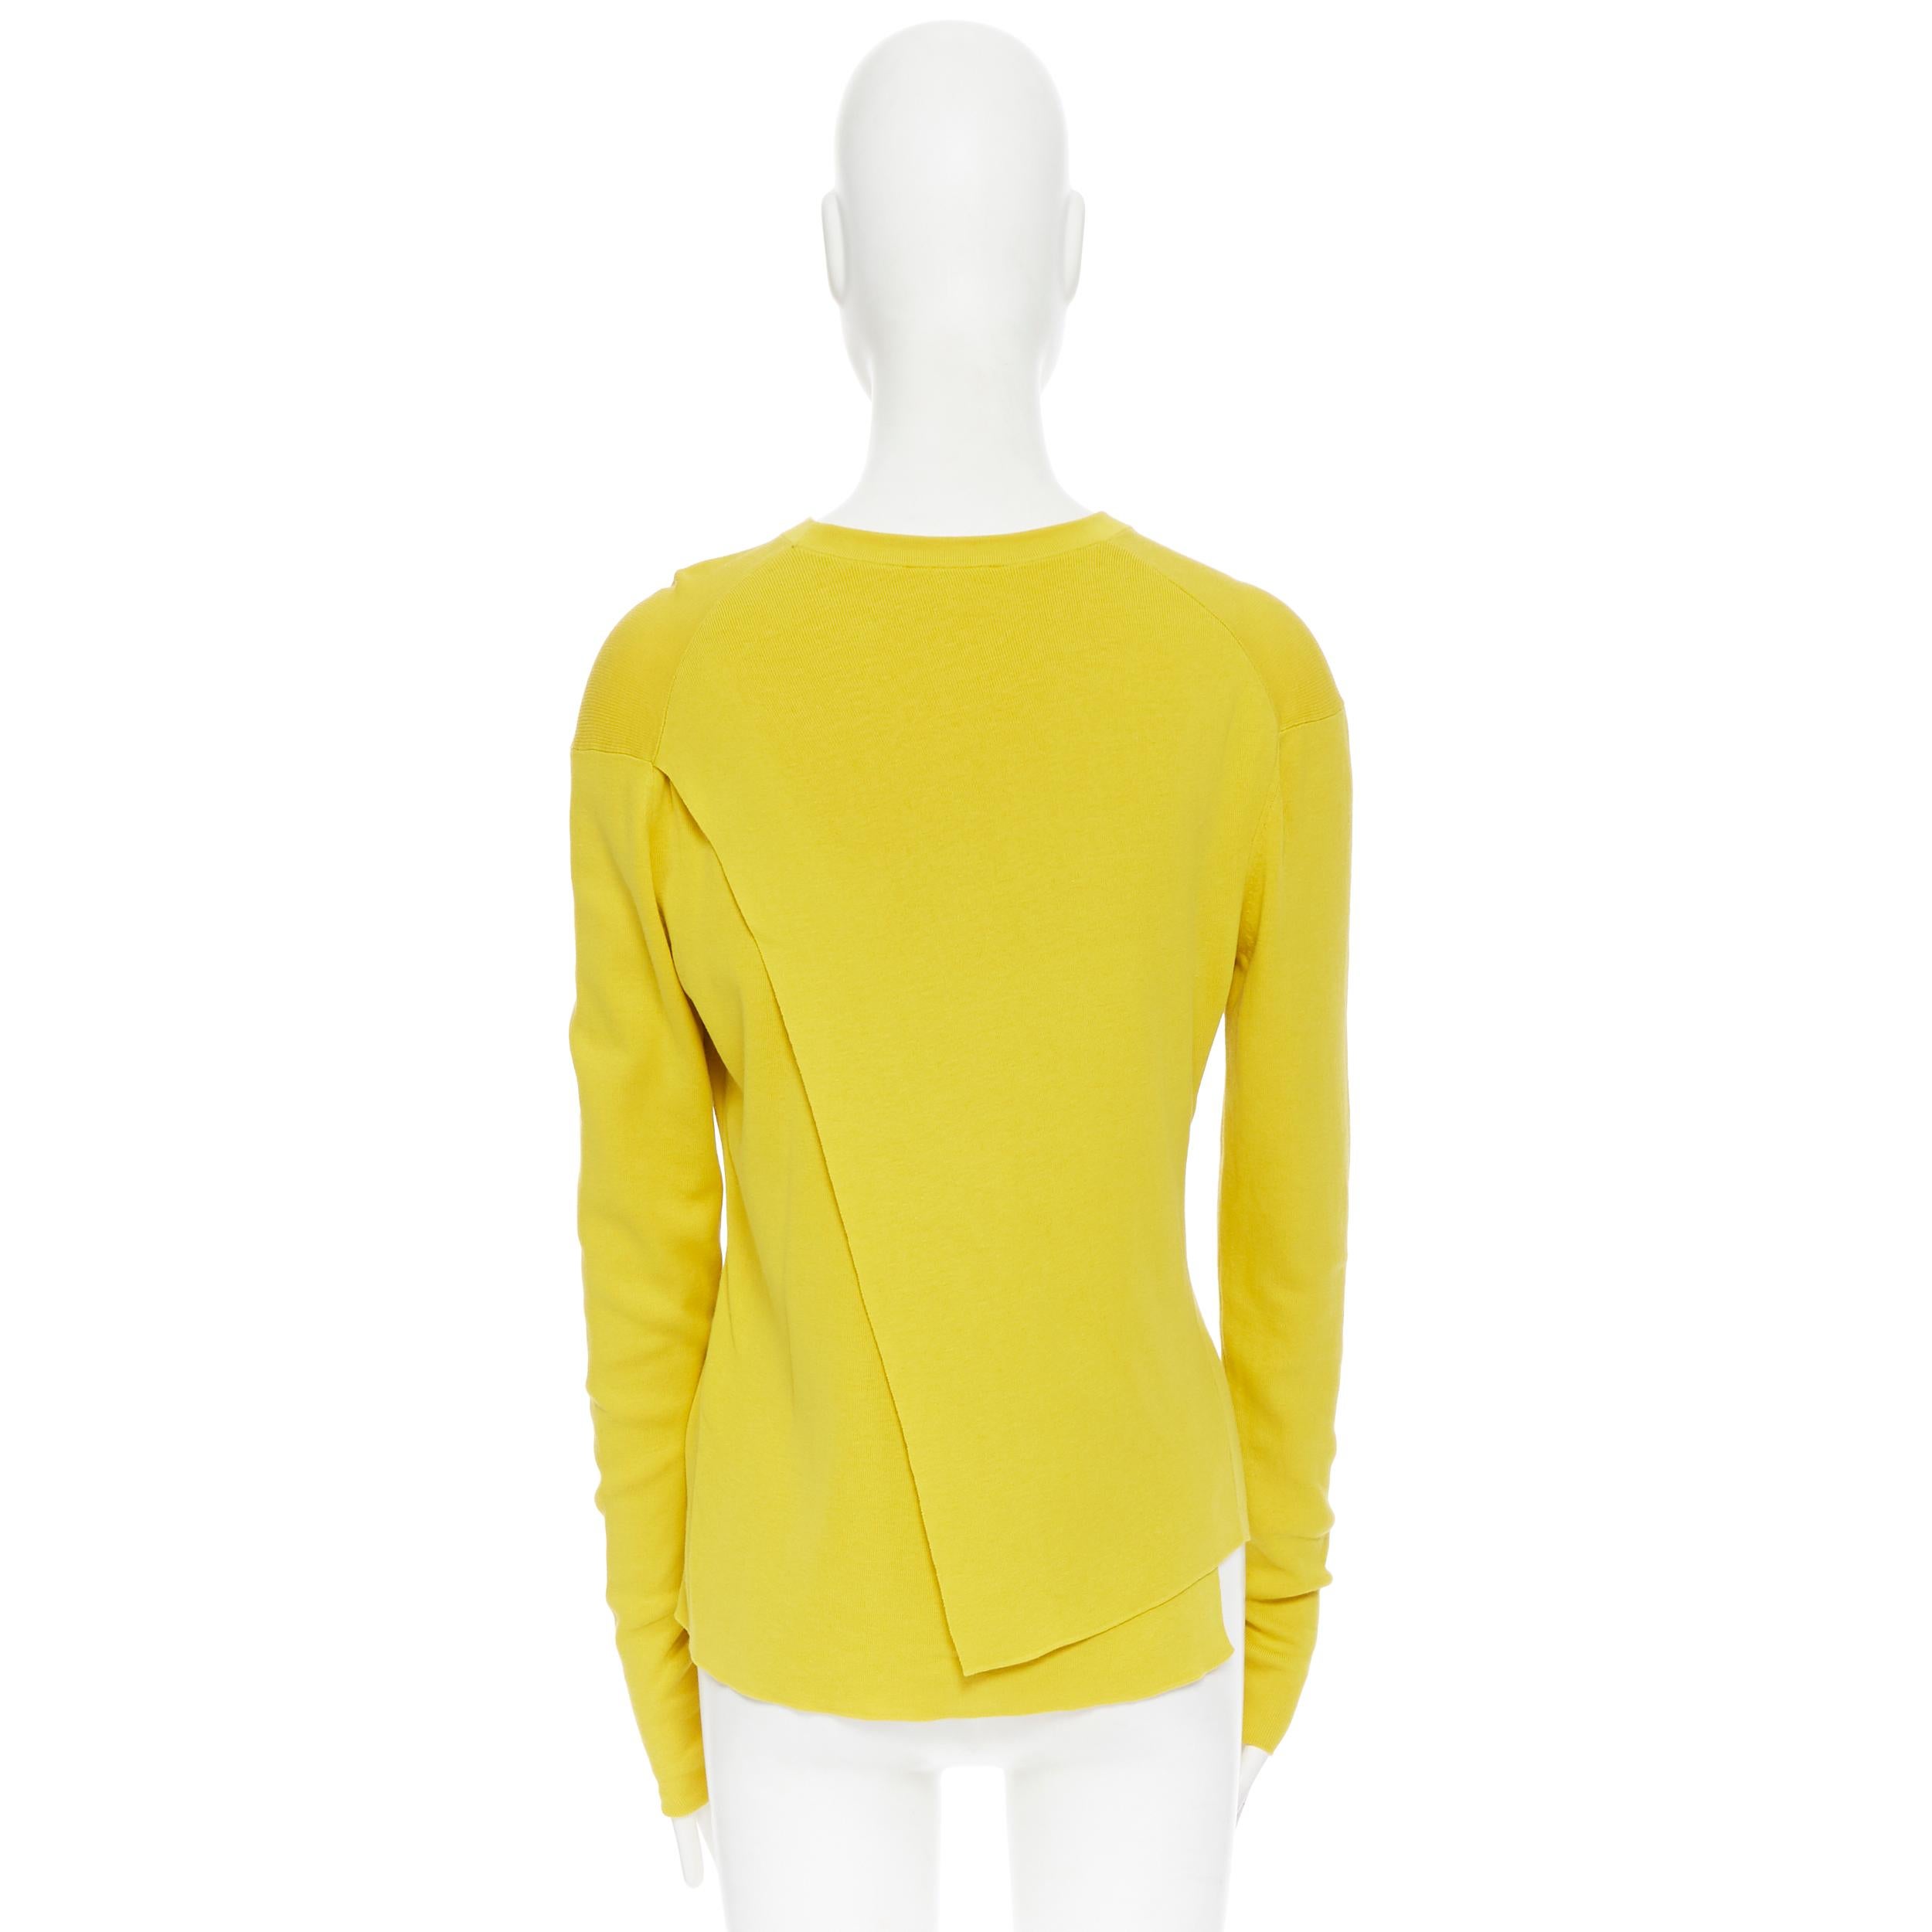 Yellow ACNE STUDIOS Materia SS15 100% cotton split back sweater top S